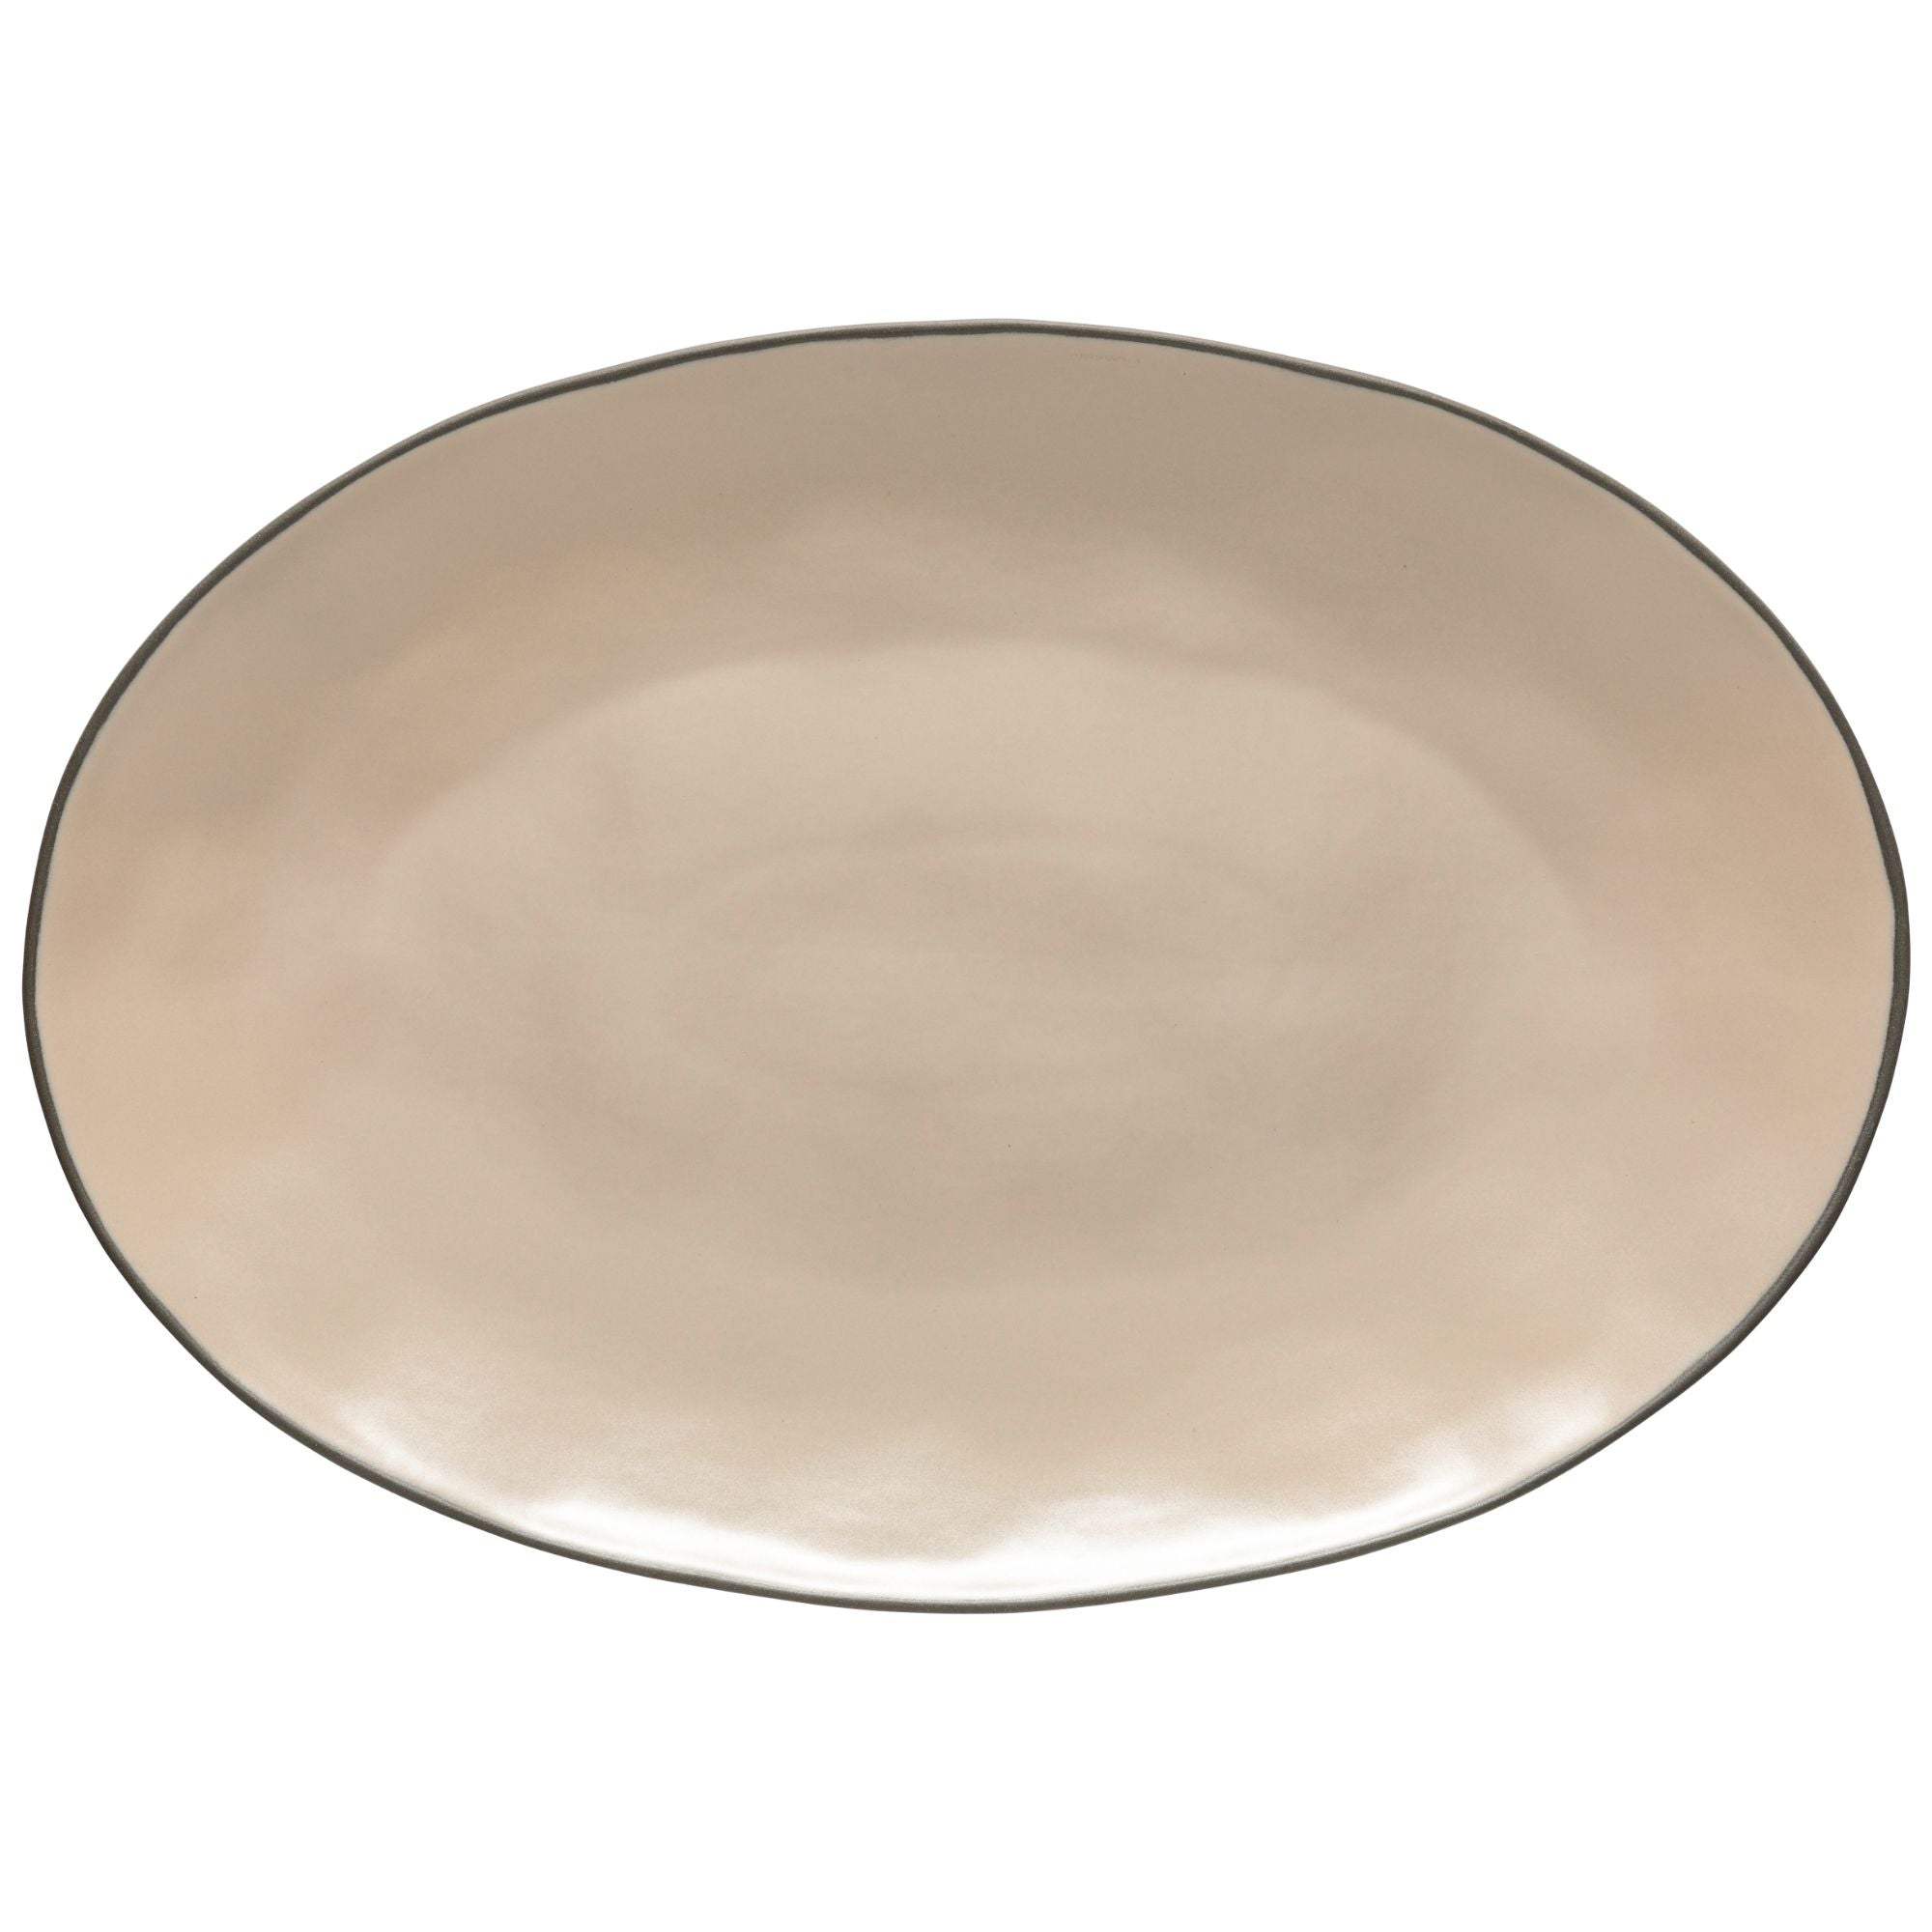 Stacked Organics Oval Platter